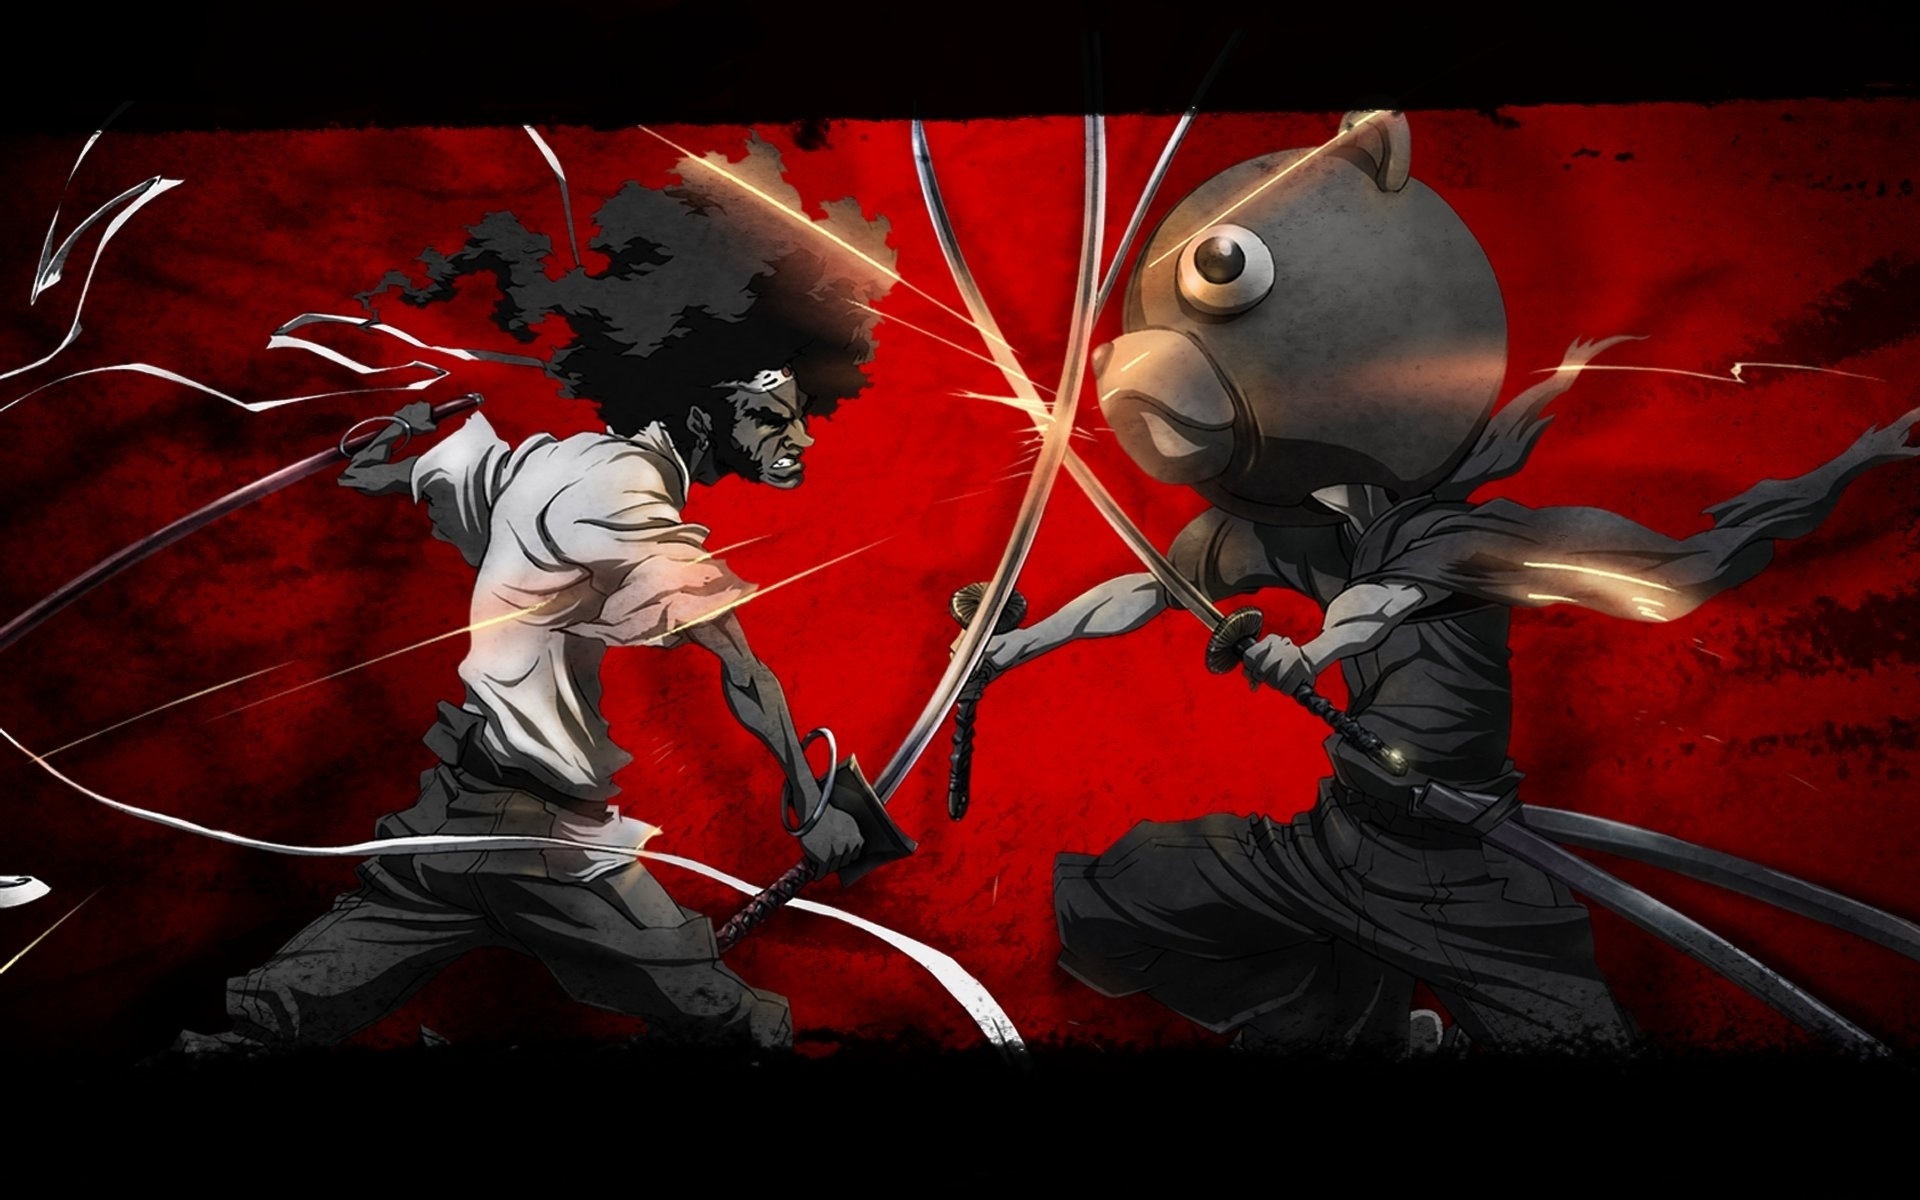 Afro Samurai vs Kuma for 1920 x 1200 widescreen resolution